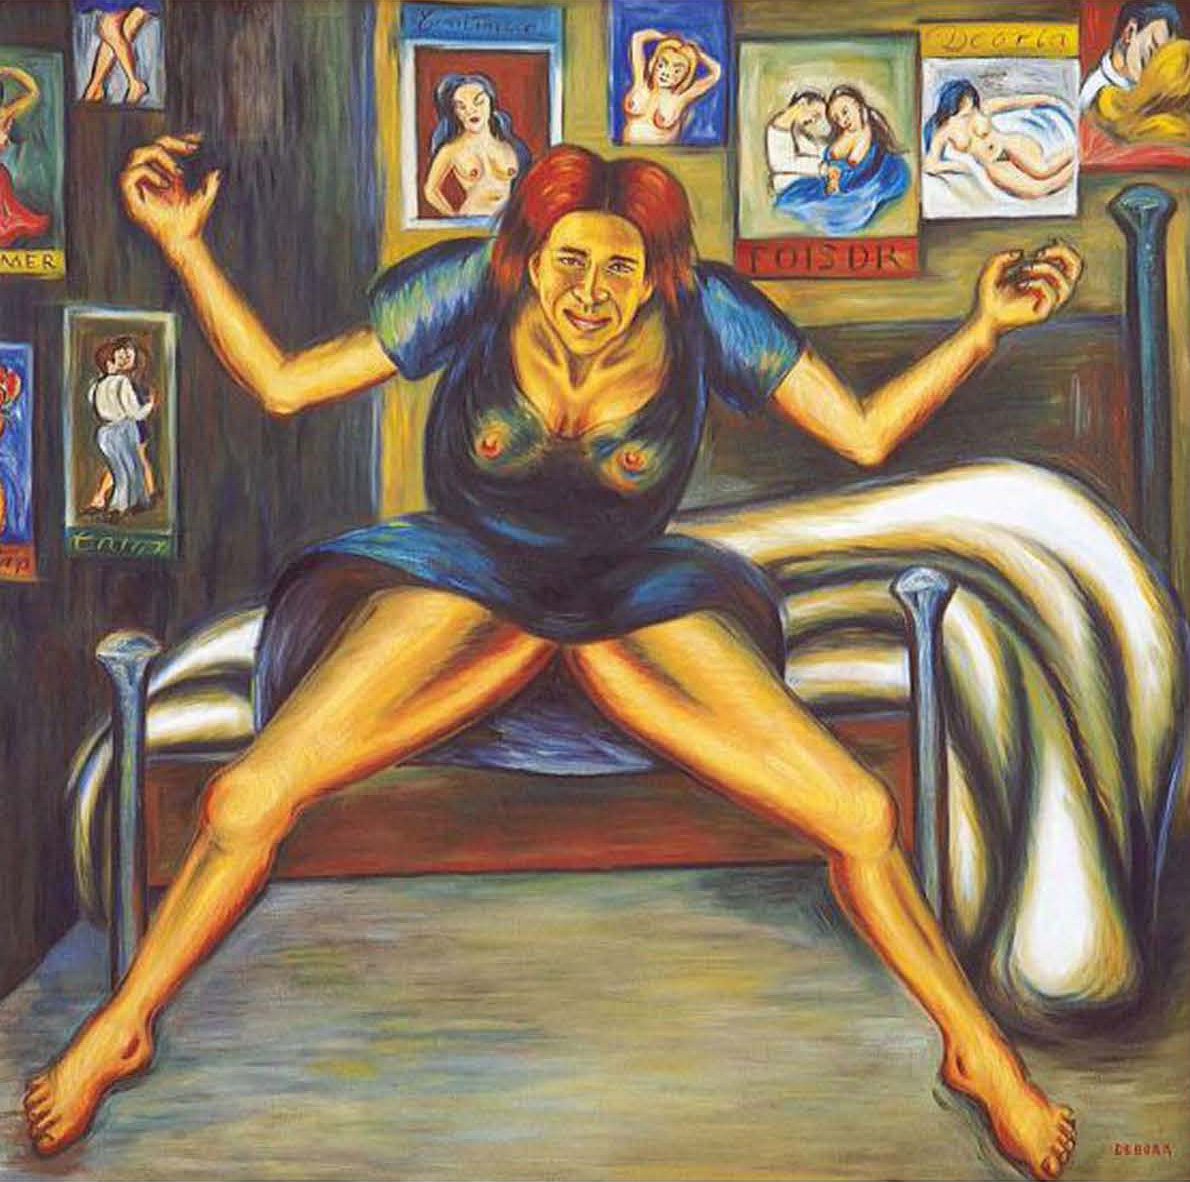 Imagen 1. Débora Arango. Esquizofrenia en el manicomio (1940). Tomada de Débora Arango: historia de un olvido. El País. https://elpais.com/cultura/2015/11/17/babelia/1447779762_662463.html